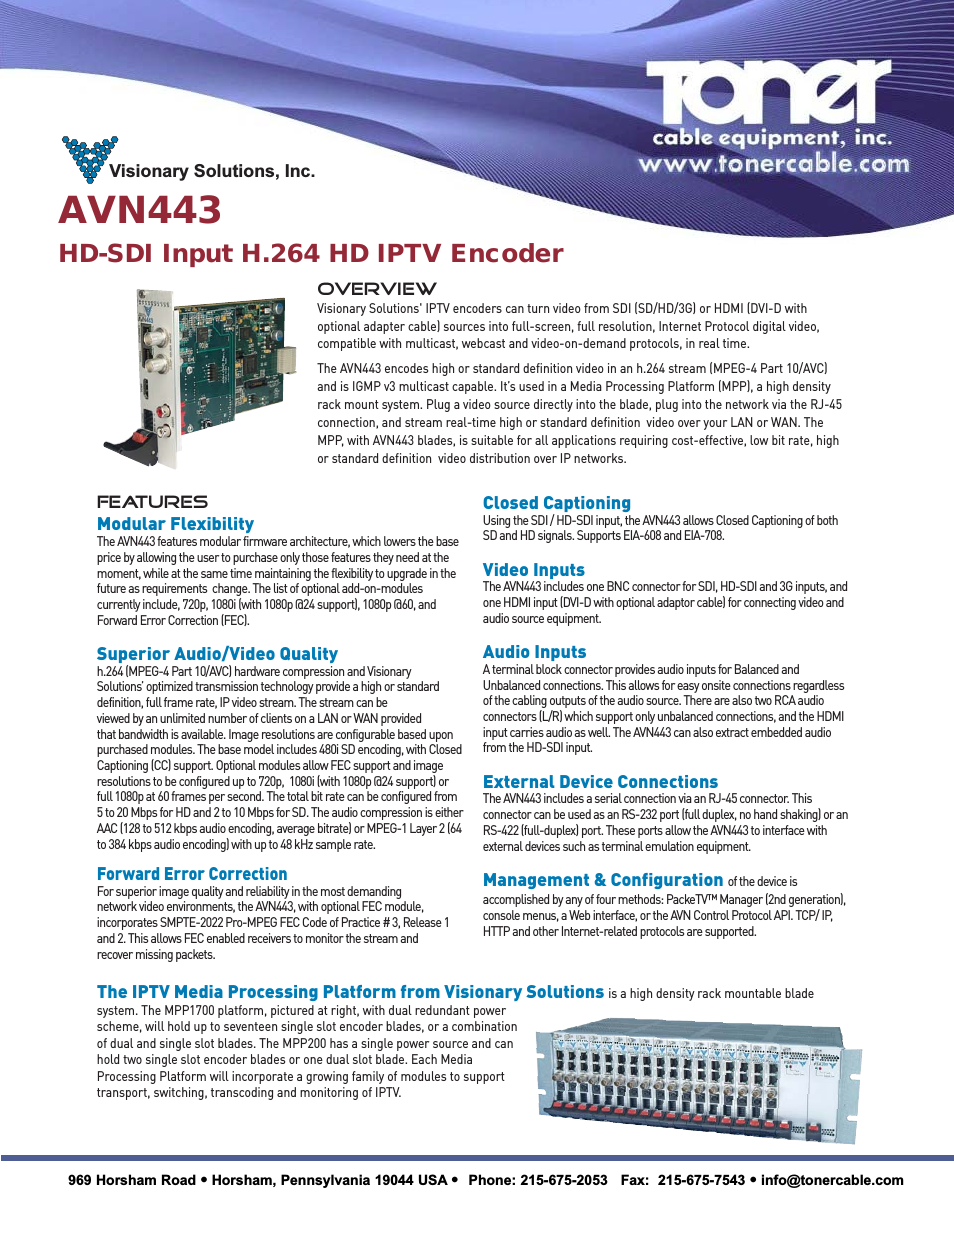 AVN443 HD-SDI Input H.264 HD IPTV Encoder